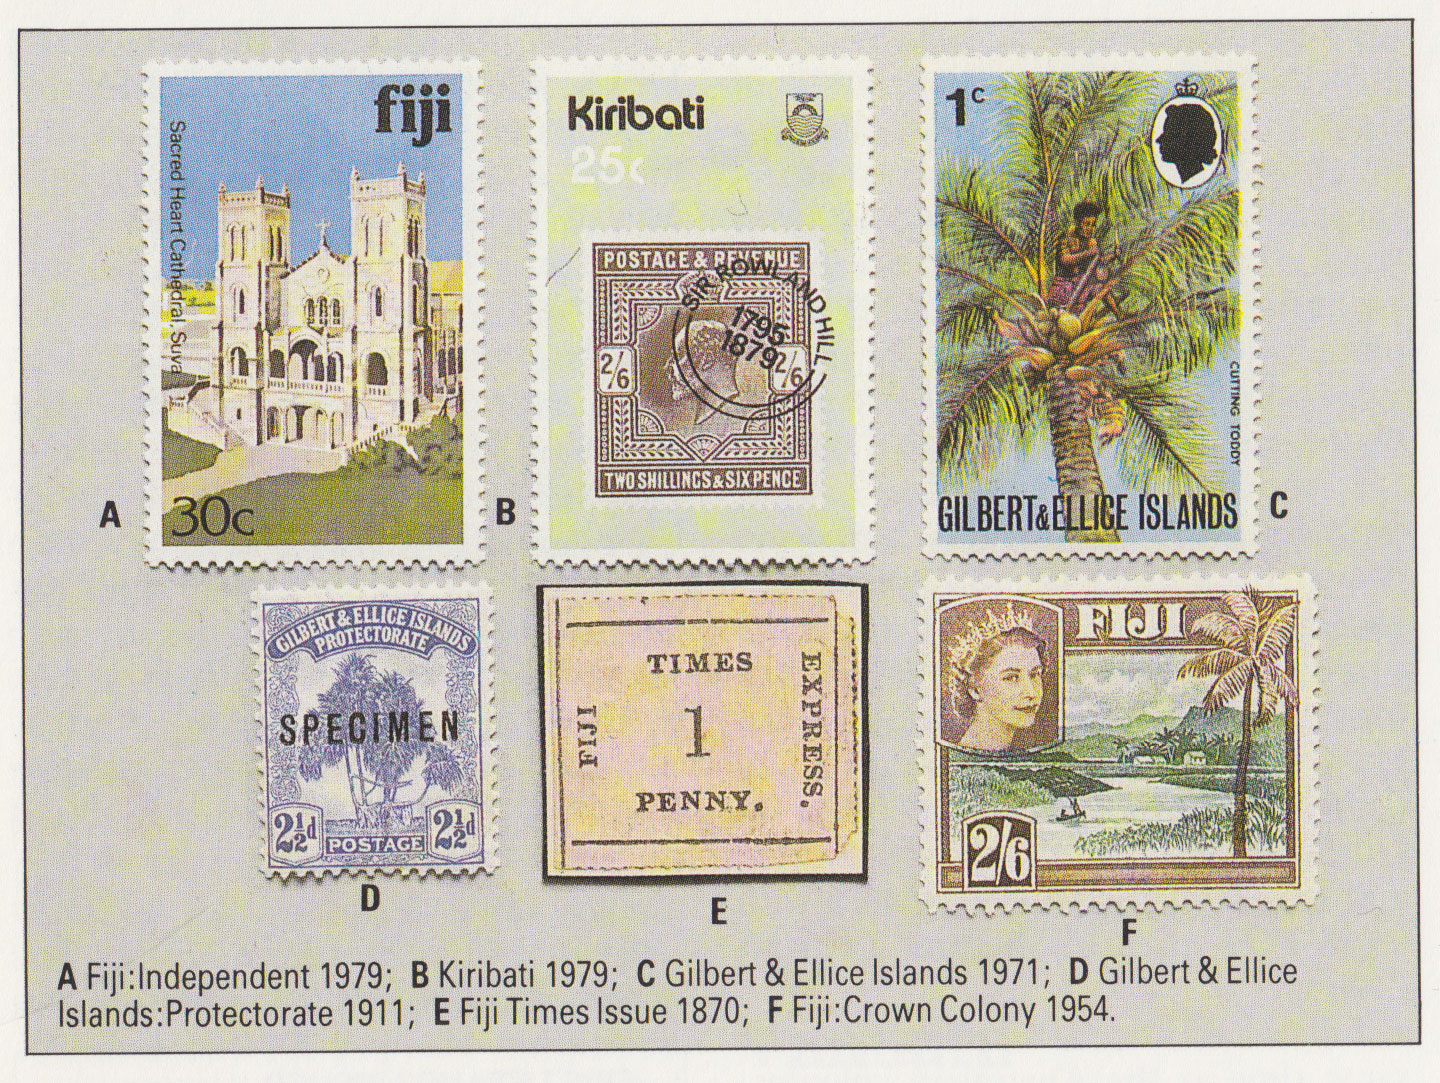 Fiji and Island stamps